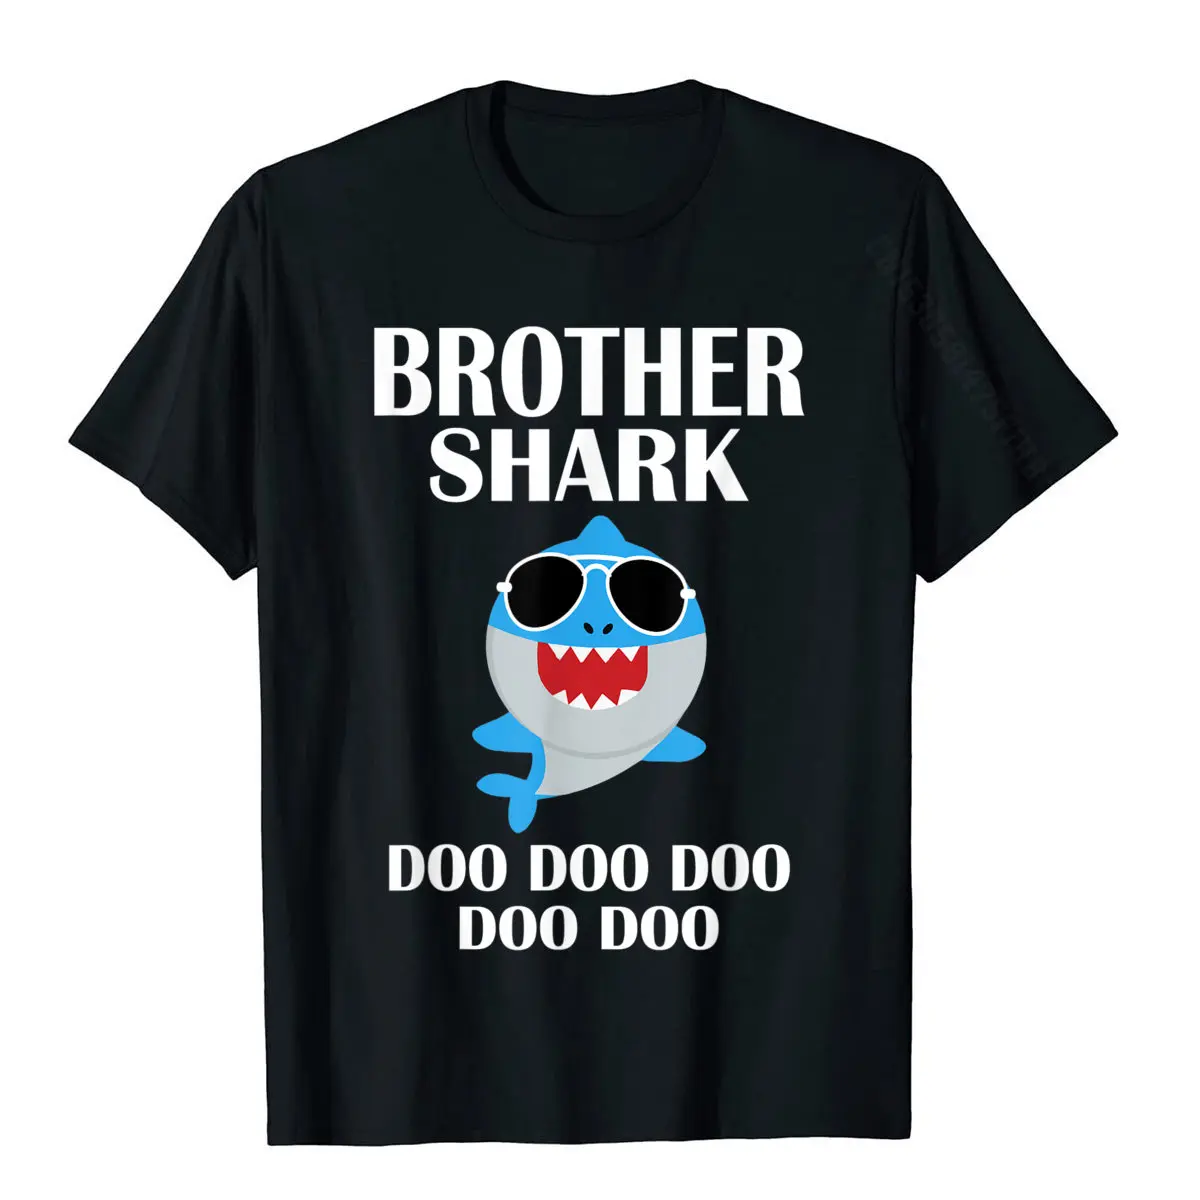 Brother Shark Shirt Doo Doo Doo Brother Birthday Christmas T-Shirt Cotton Camisa T Shirt Fitted Boy T Shirt Cool